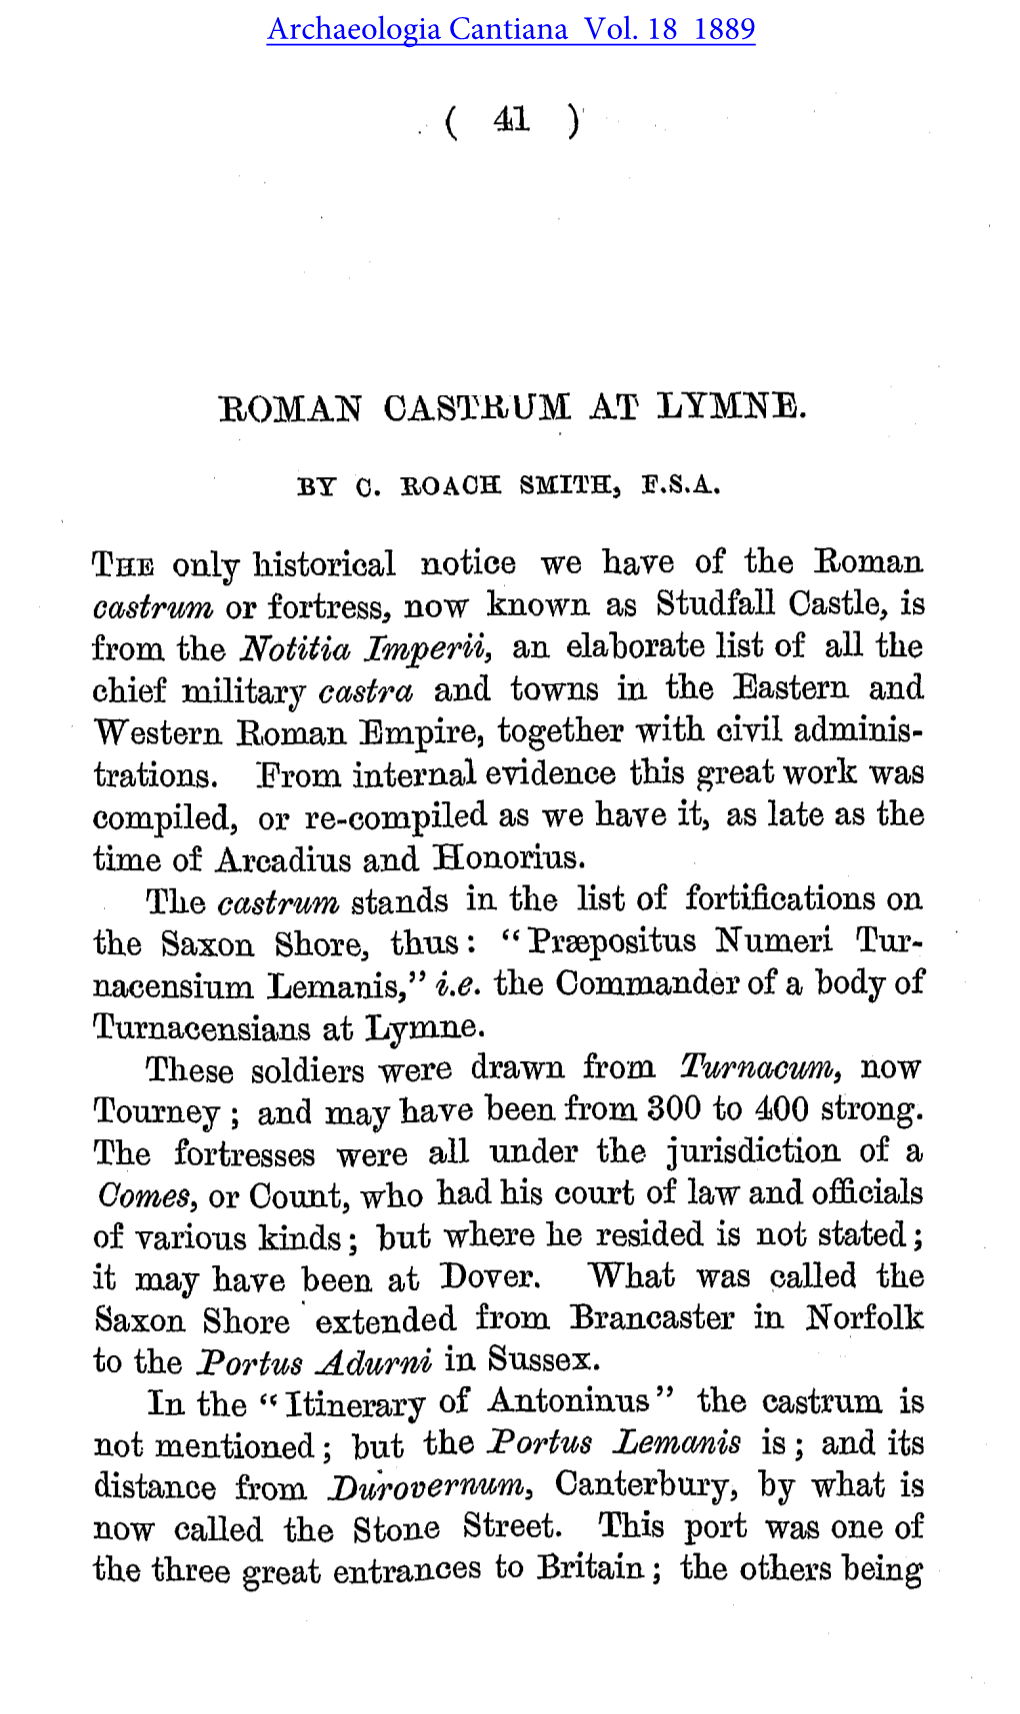 Roman Castrum at Lympne